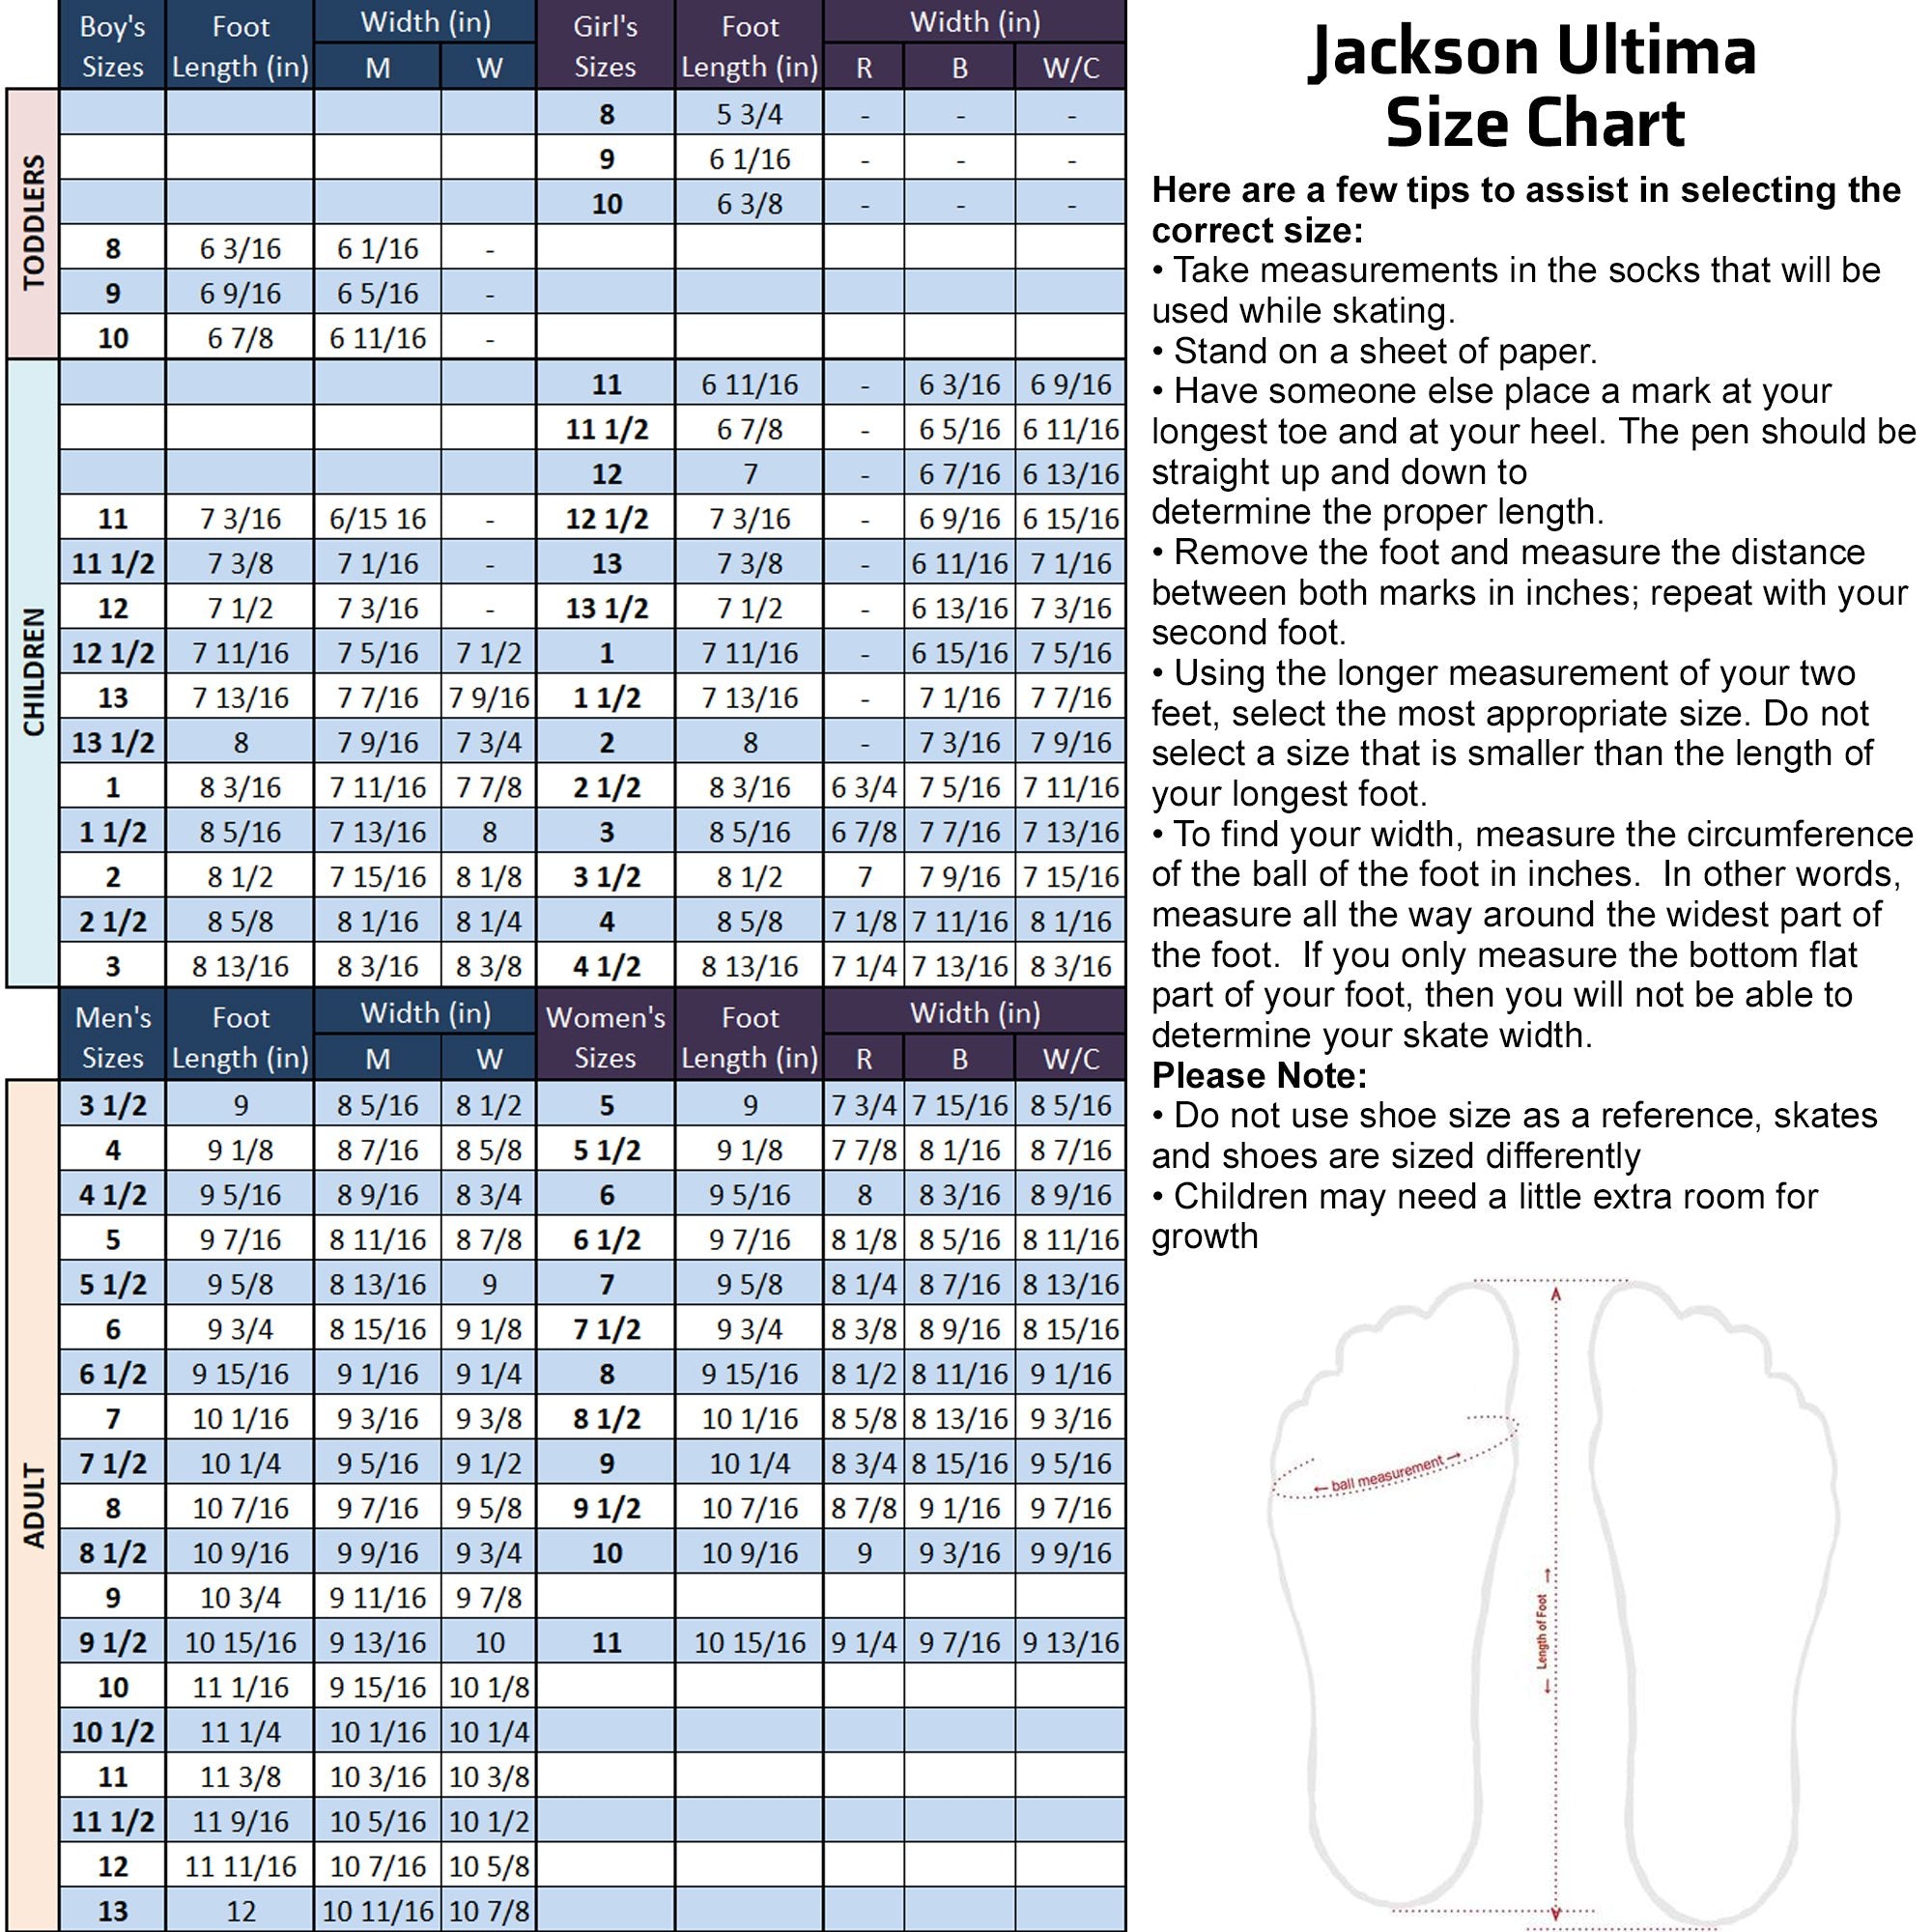 Jackson Ultima Mystique men's black figure skate